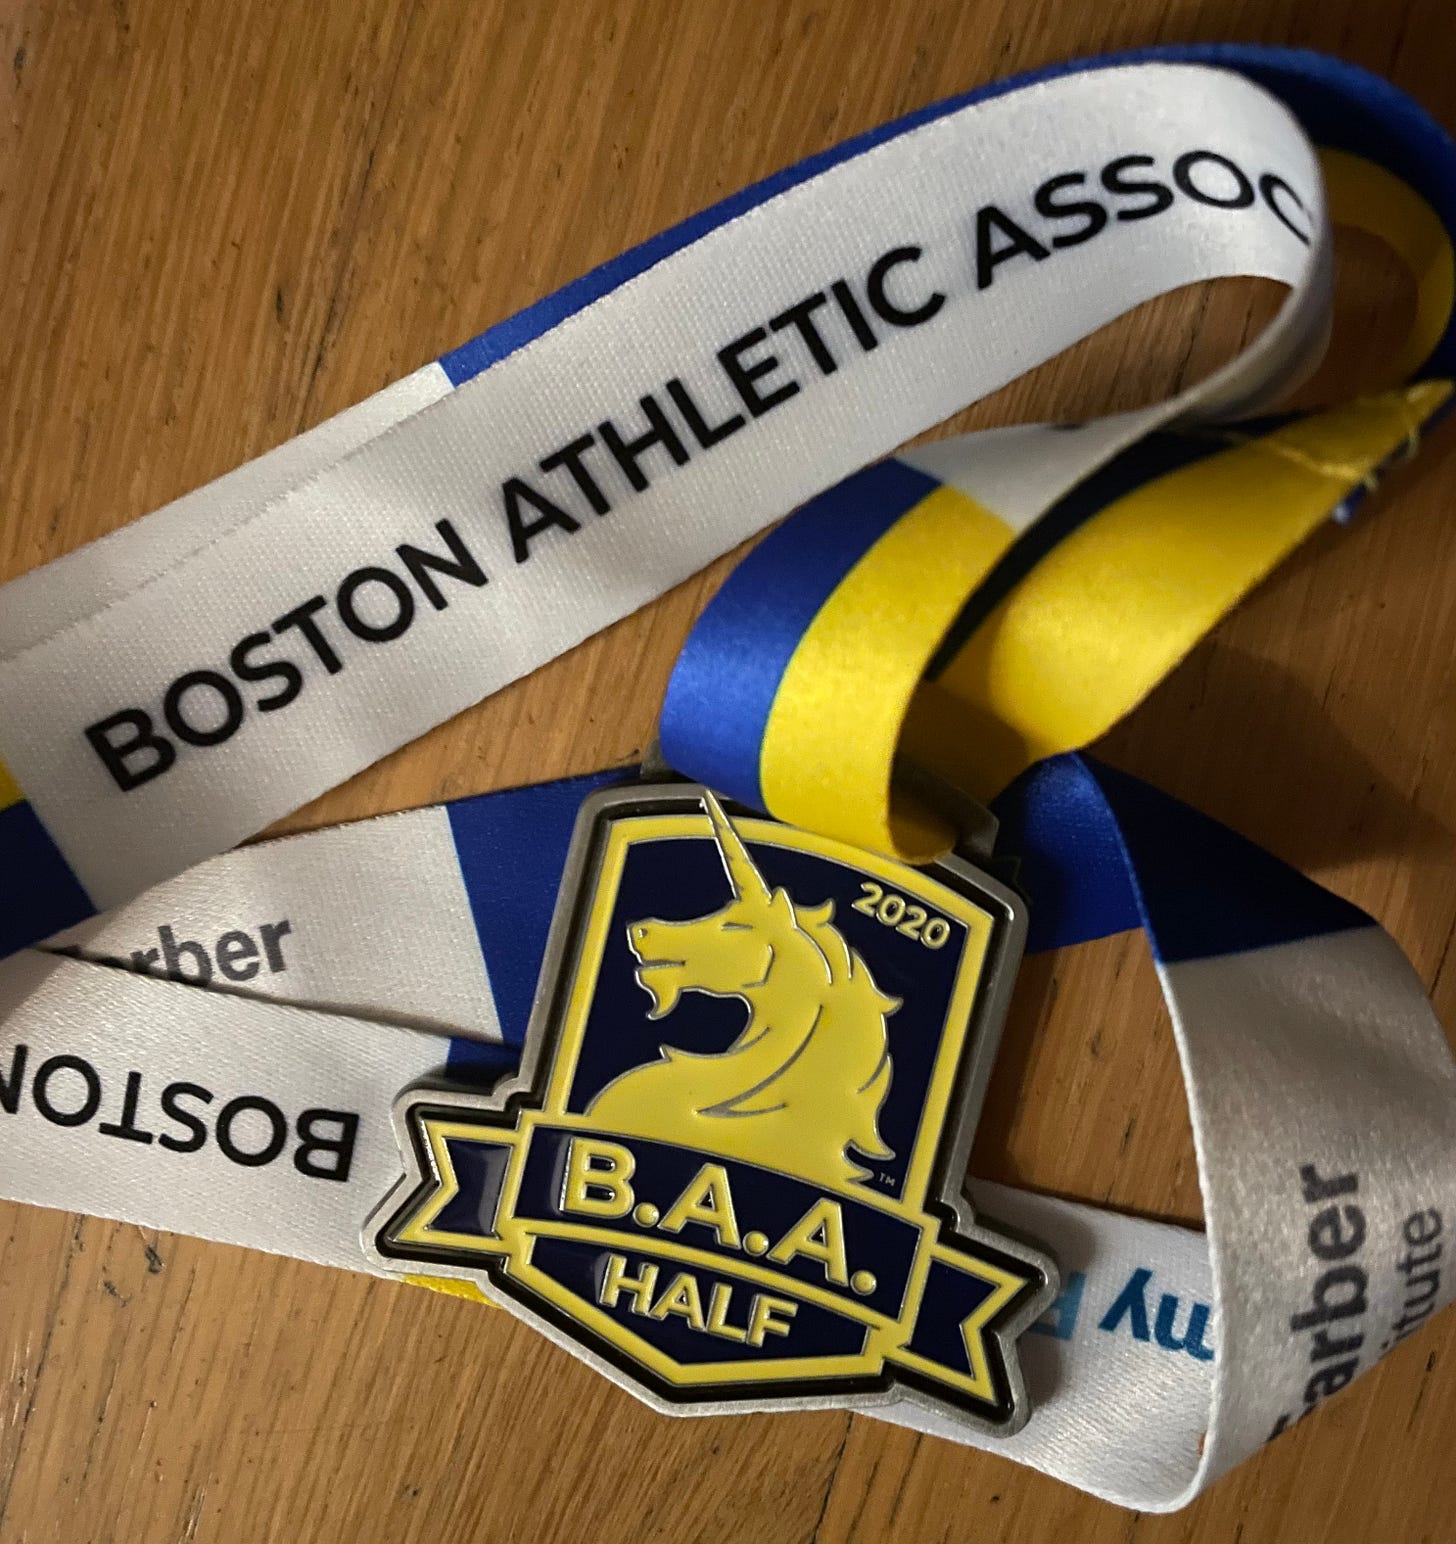 BAA Boston Half Marathon medal